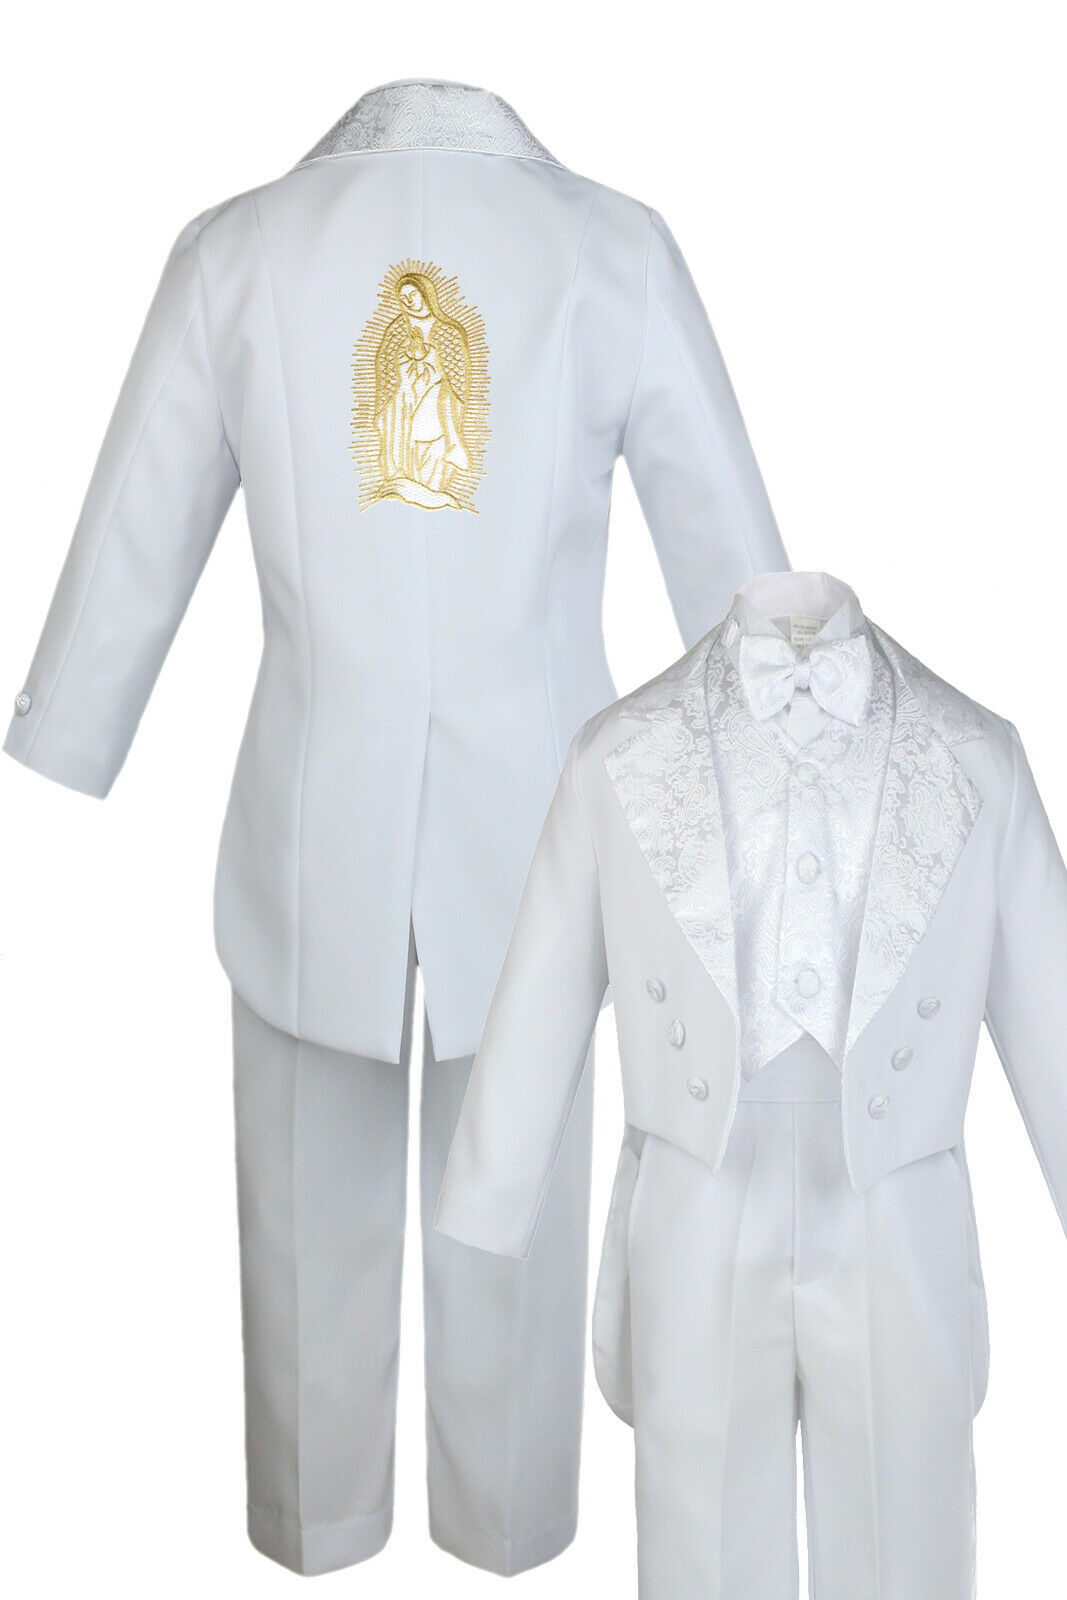 Hermosala New White Christening Virgin Mary Baptism Tuxedo Suit Baby Toddler Boy